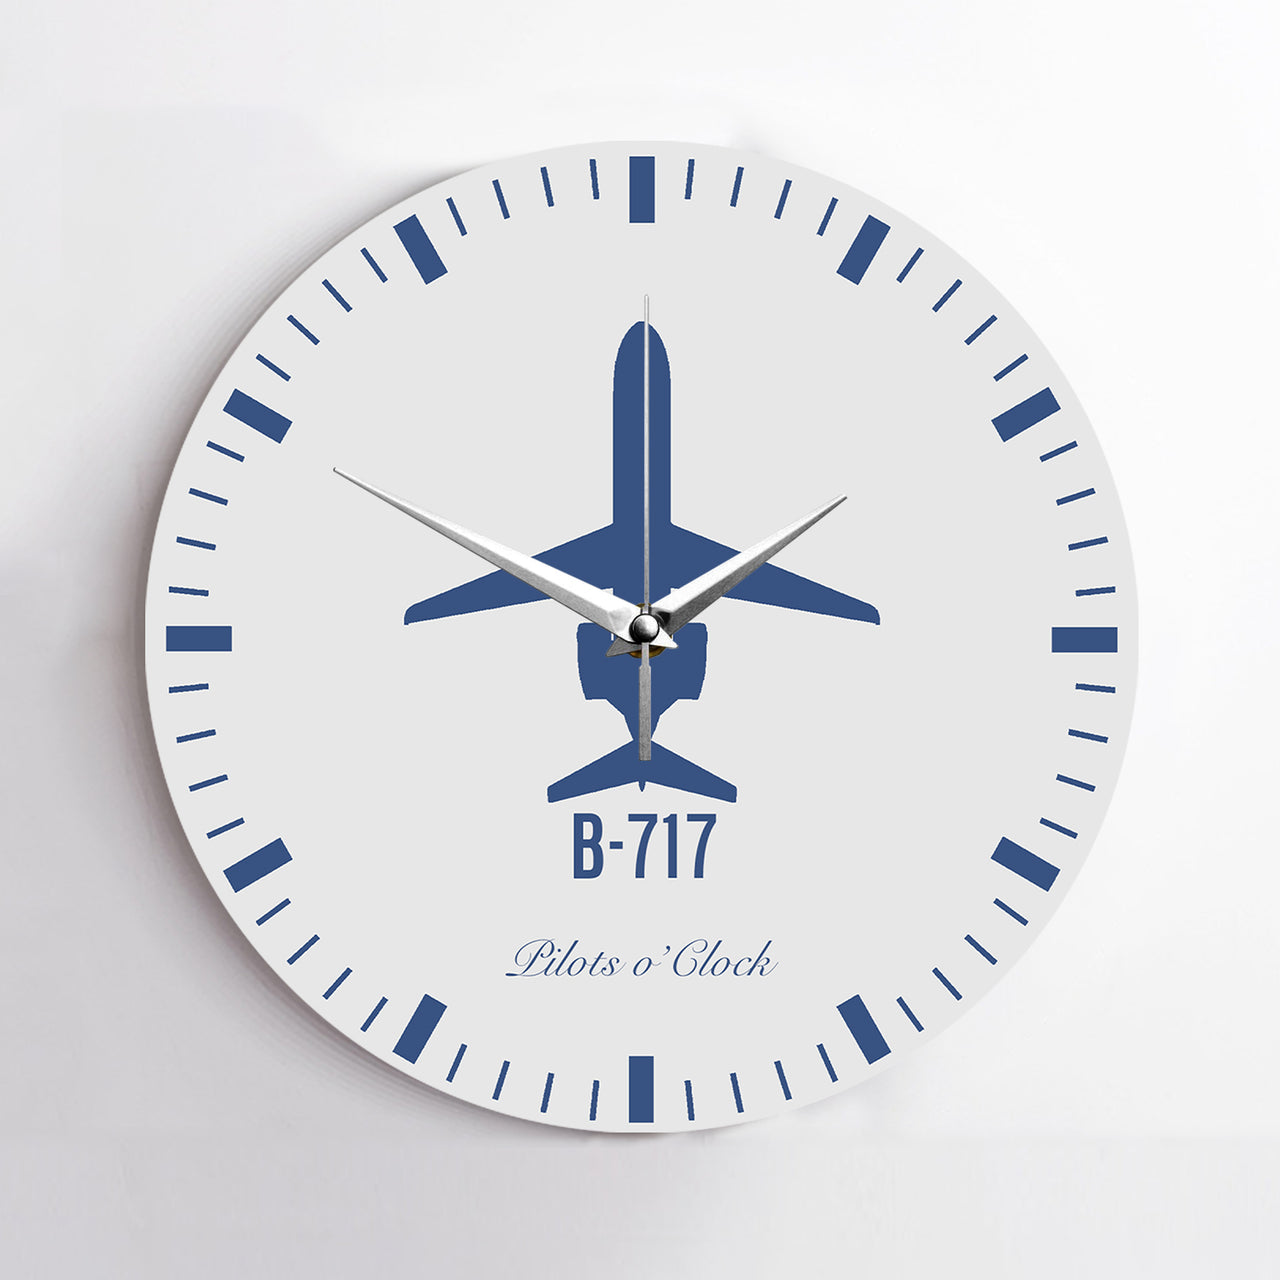 Boeing 717 Printed Wall Clocks